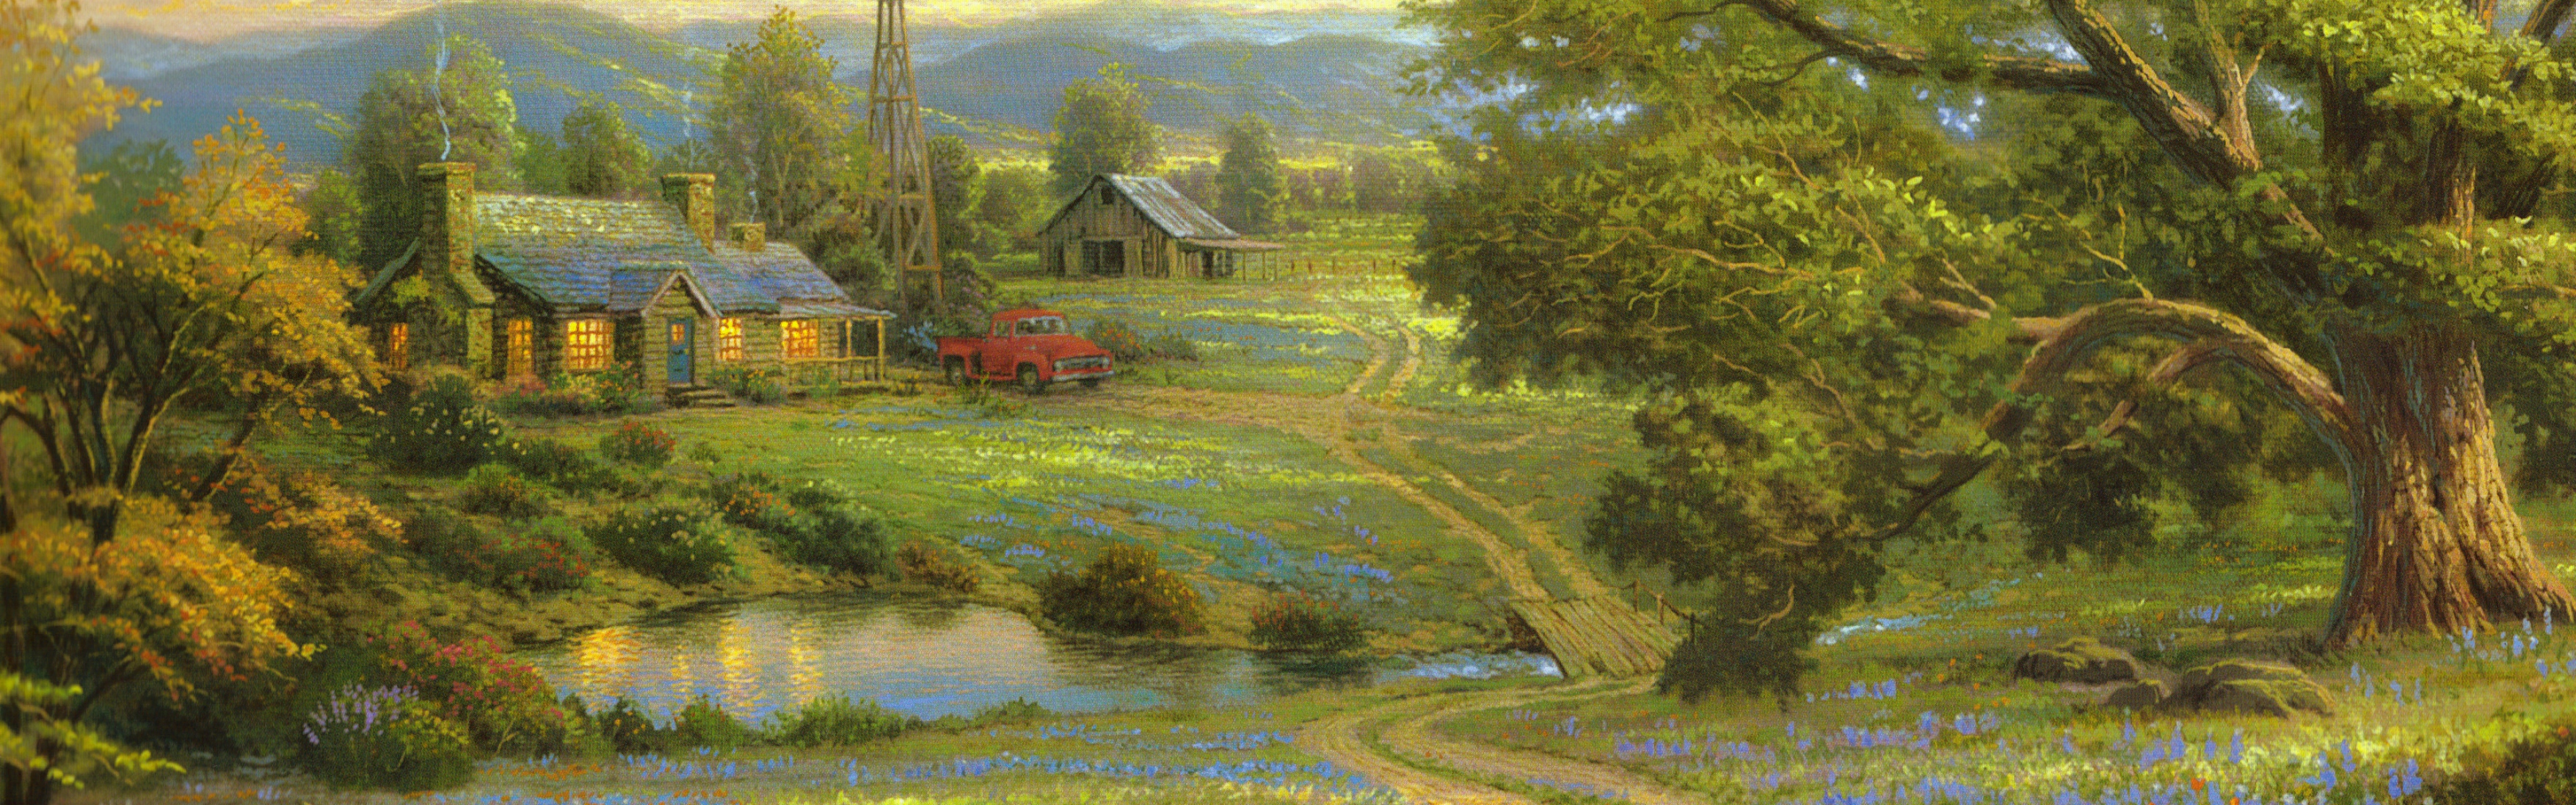 Download Wallpaper 3840x1200 Painting, Art, Landscape, Road ...